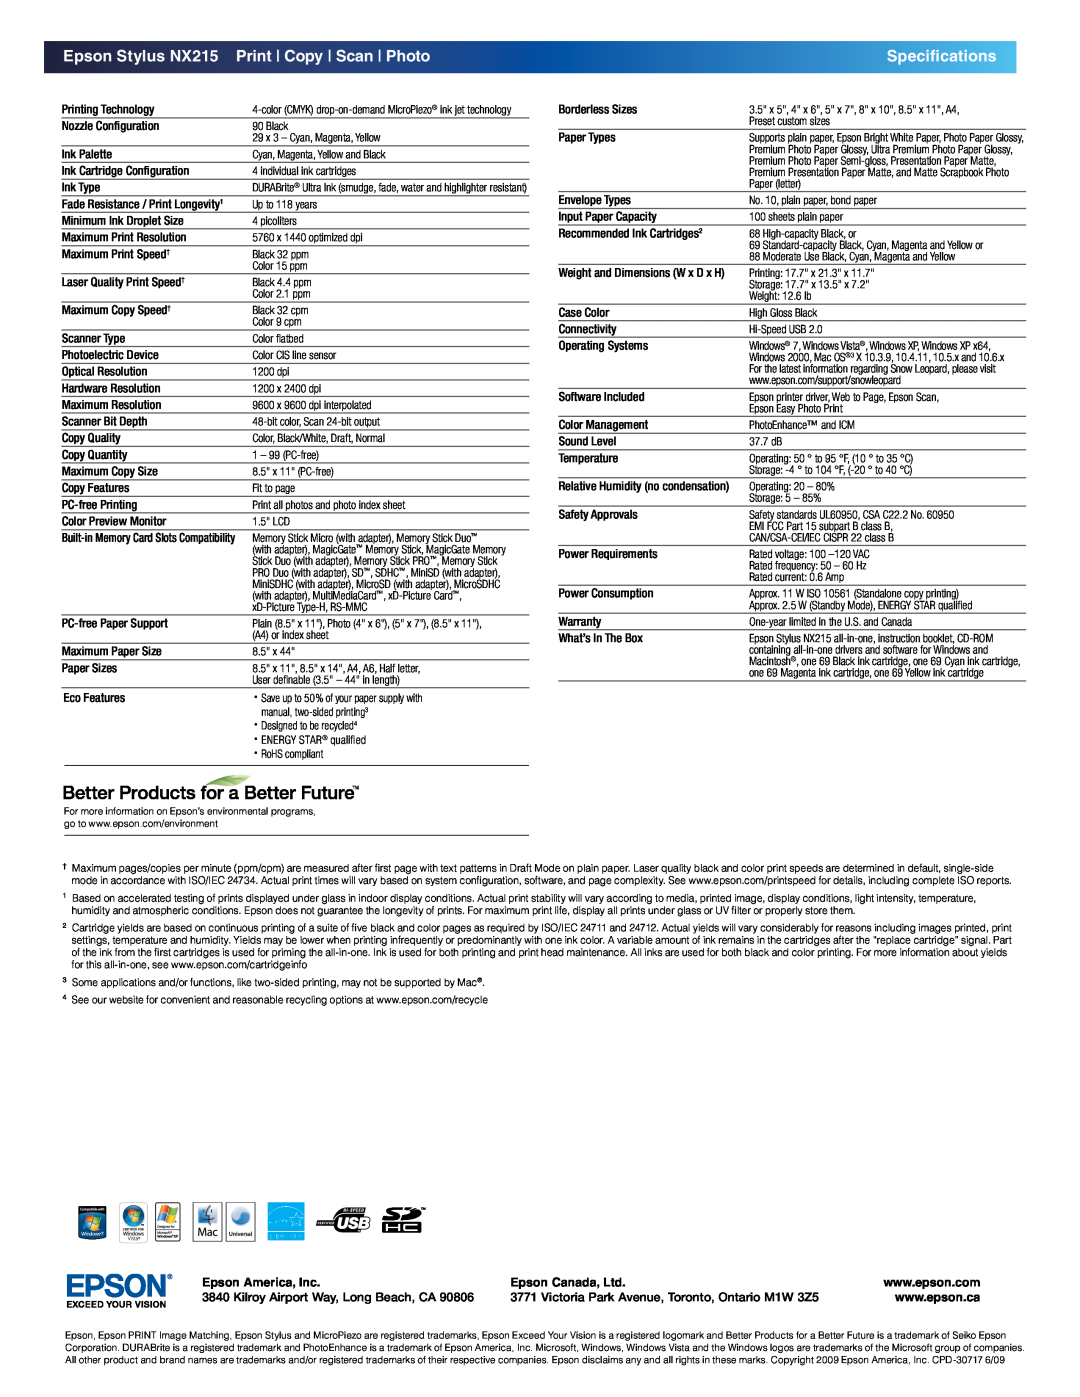 Epson Epson Stylus NX215 Print Copy Scan Photo, Specifications, Epson America, Inc, Kilroy Airport Way, Long Beach, CA 